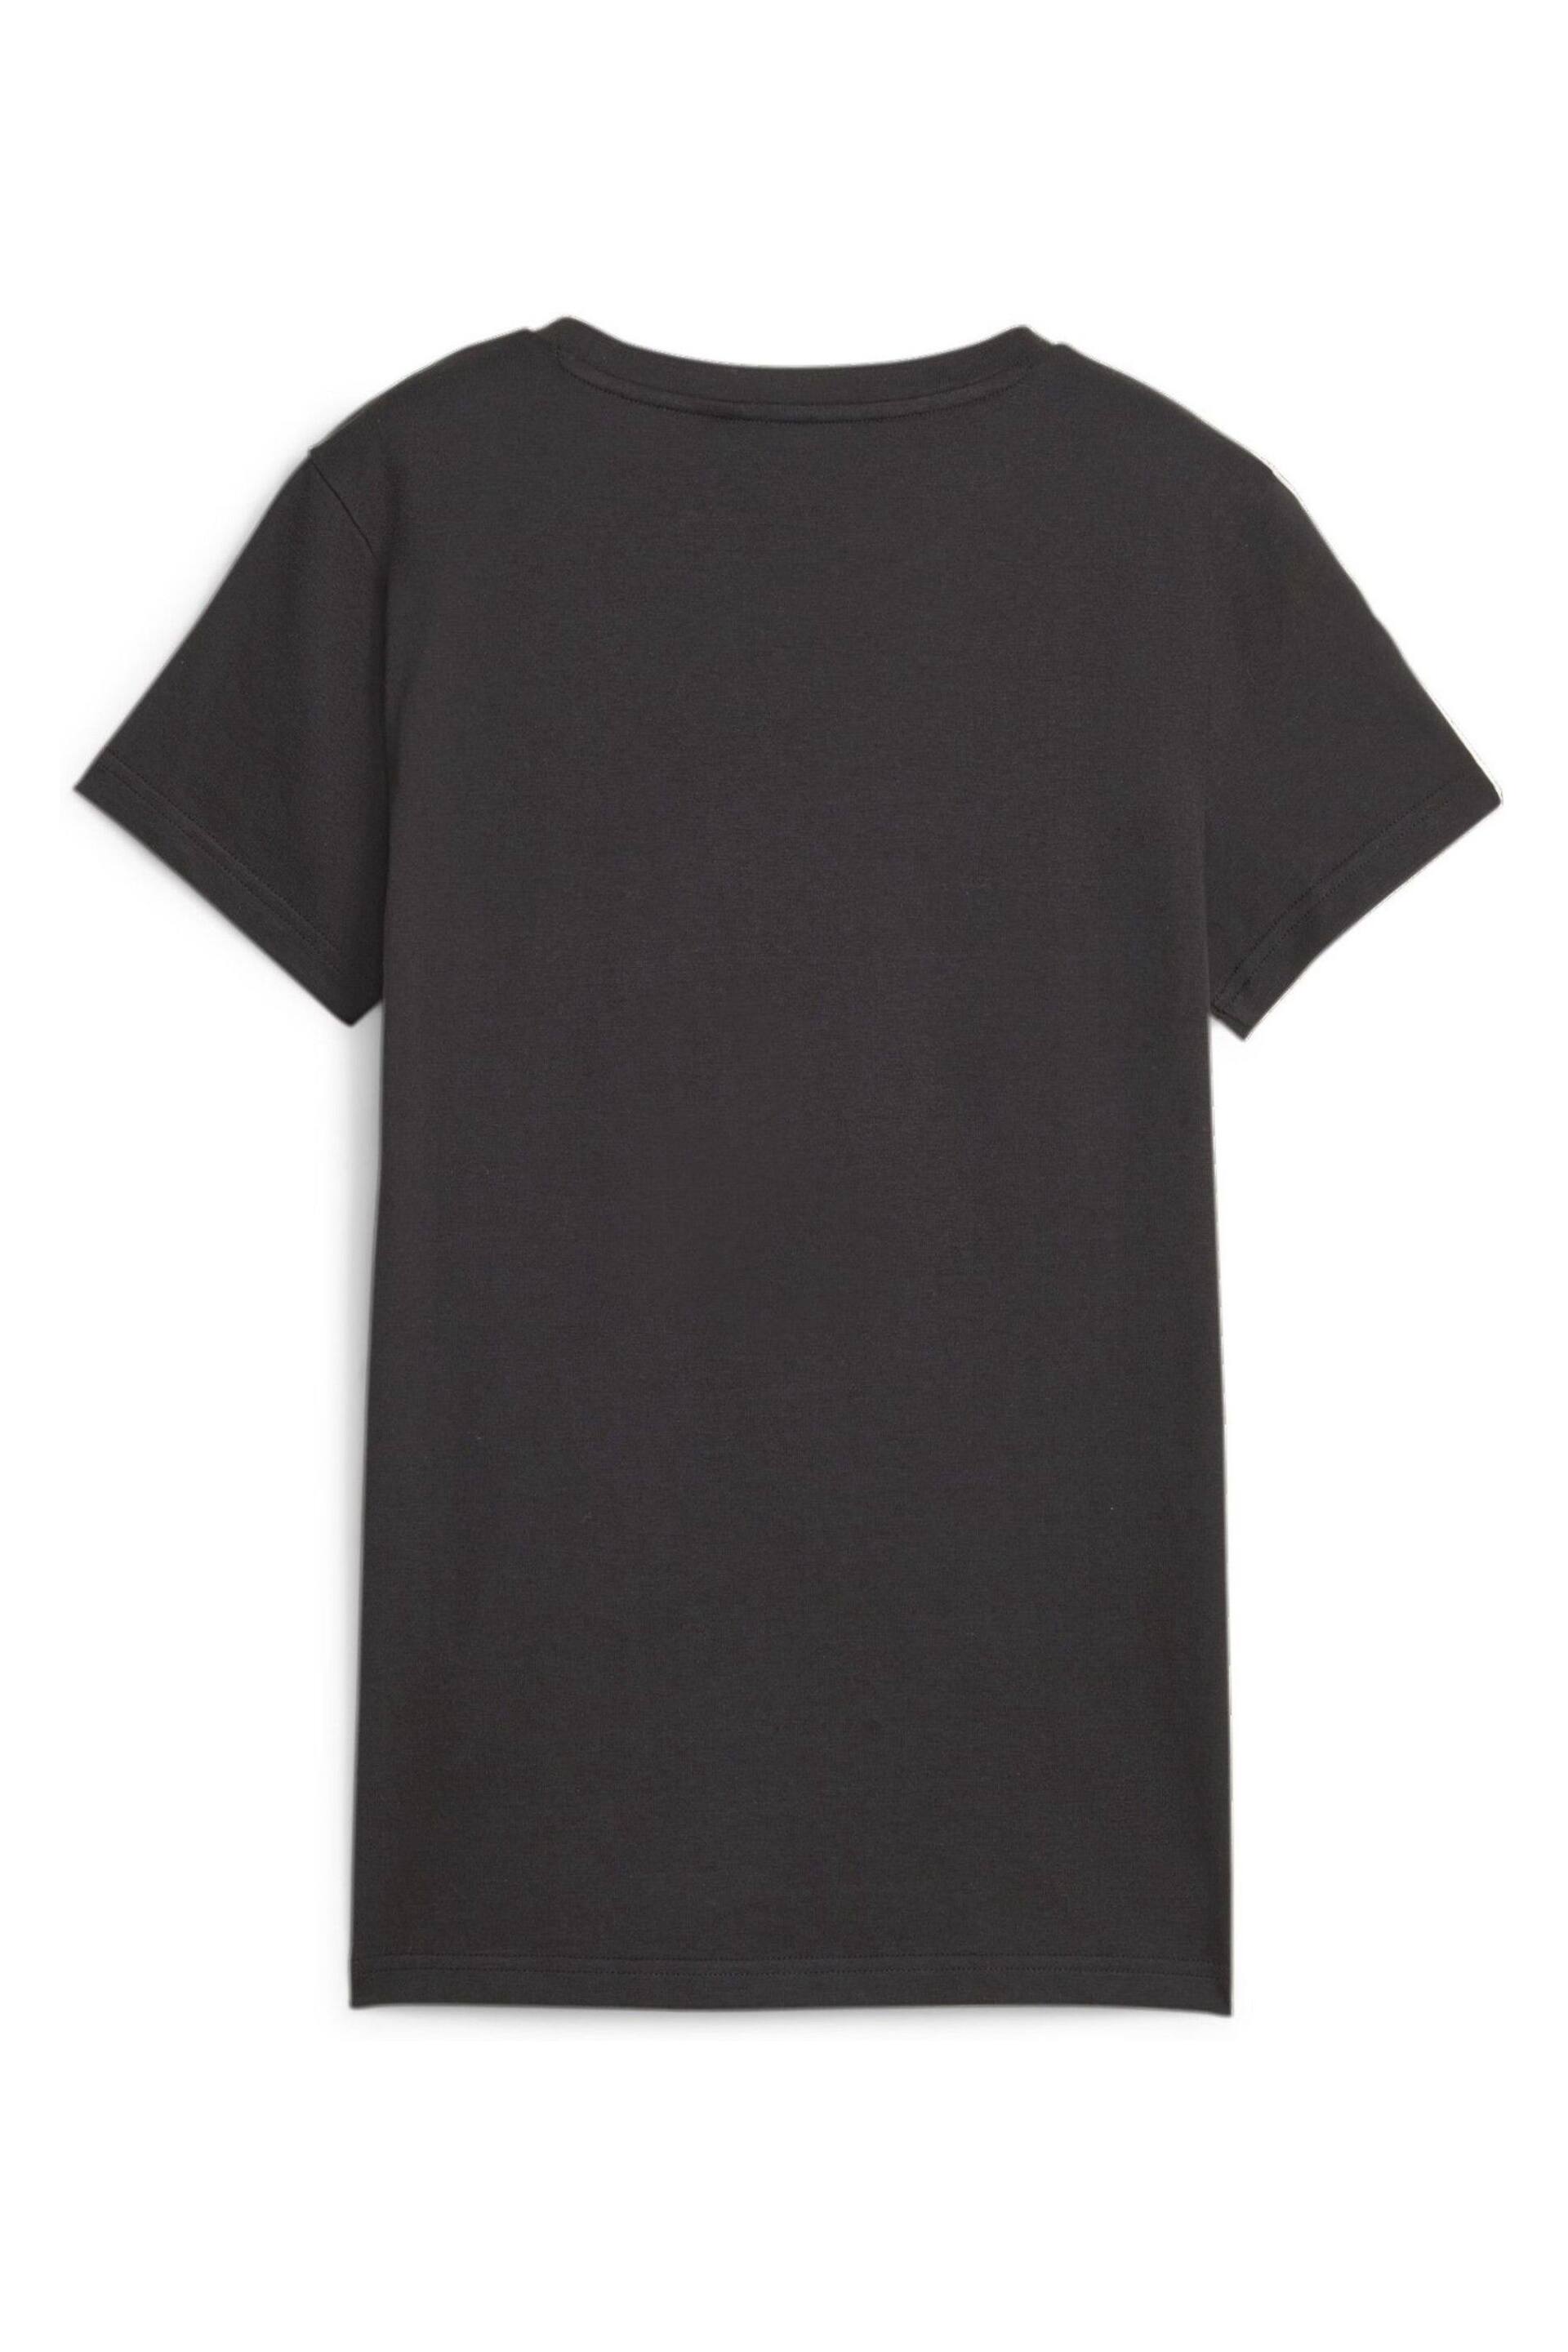 Puma Black Womens Better Essentials T-Shirt - Image 5 of 5